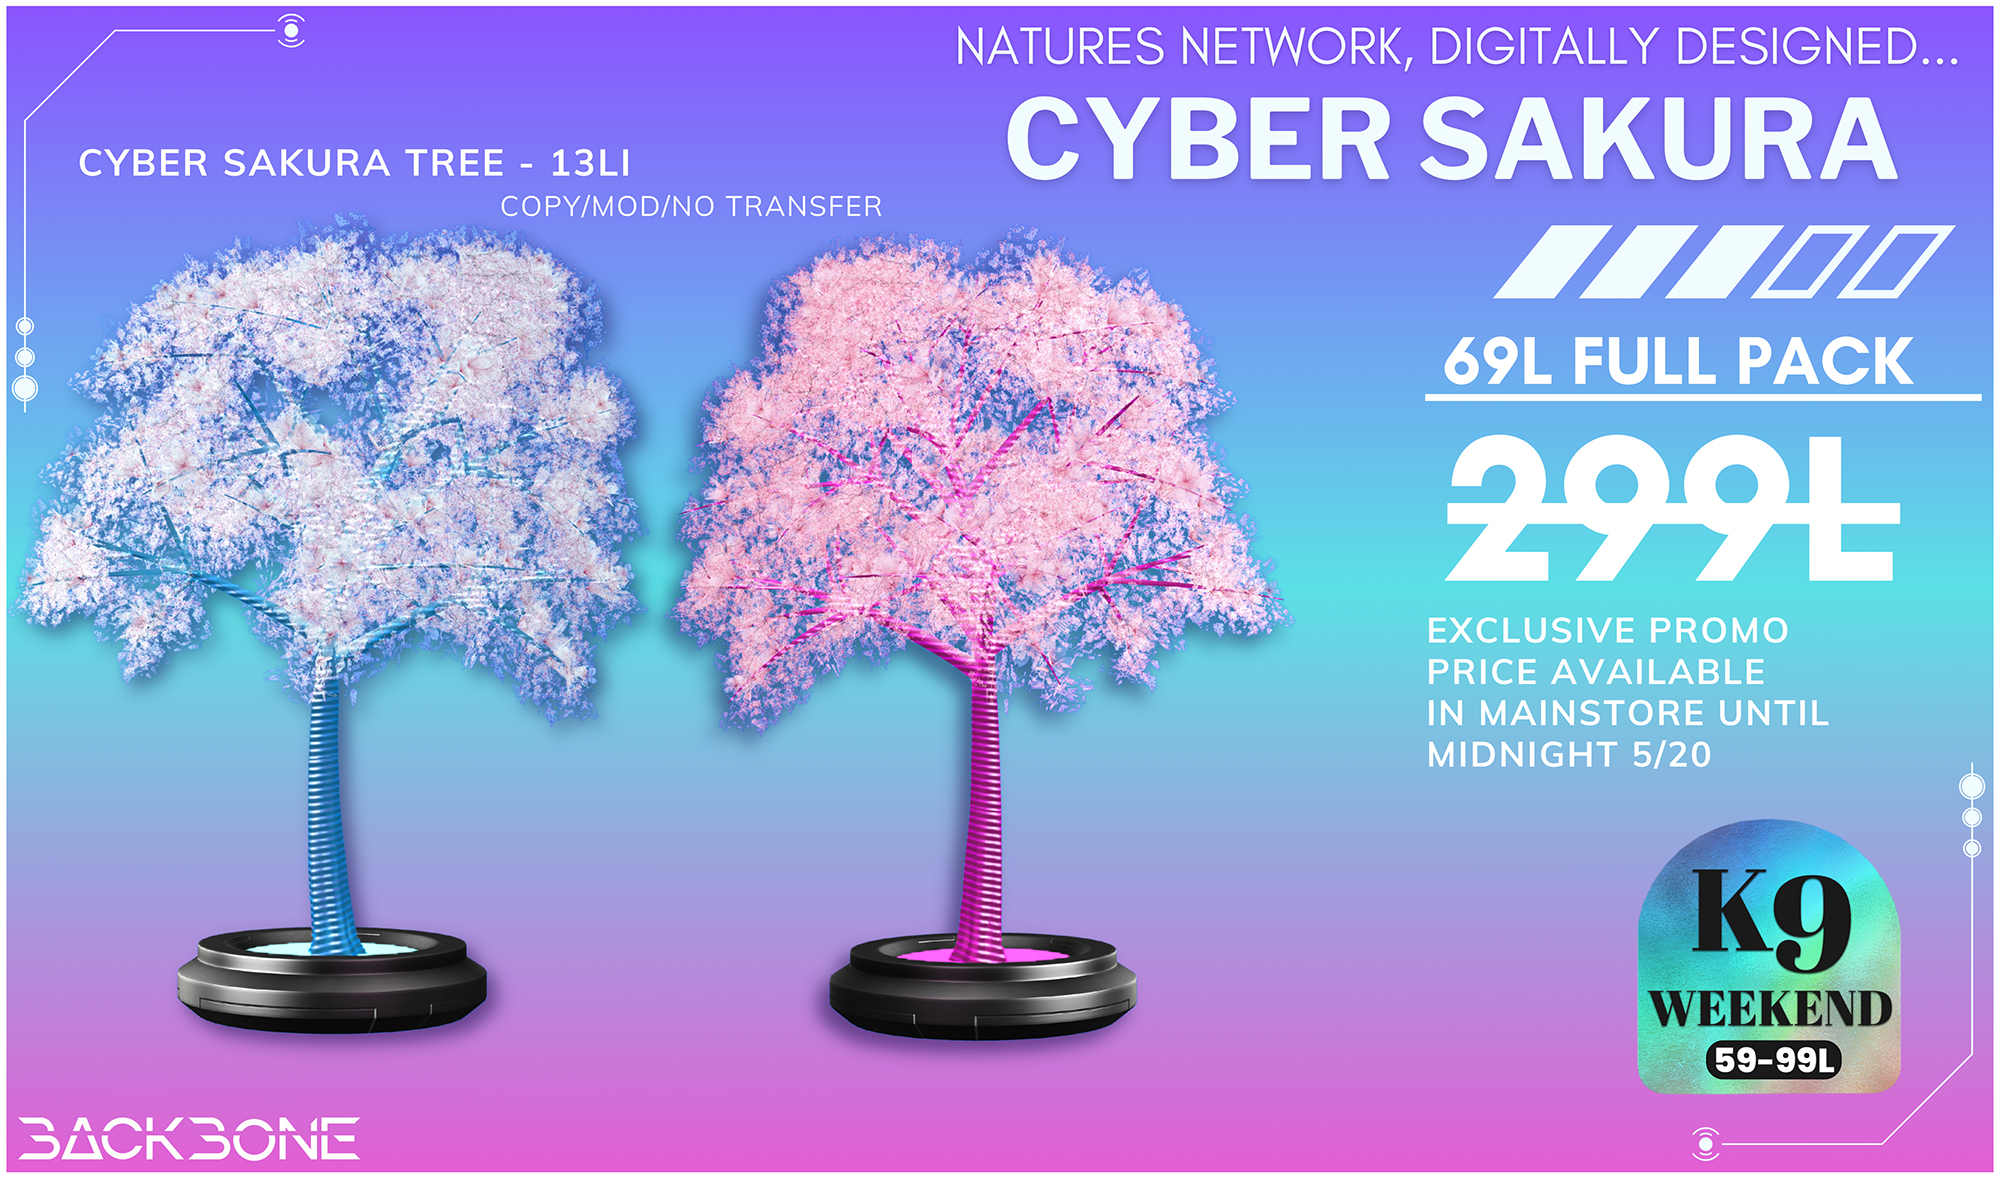 BackBone – Cyber Sakura Trees